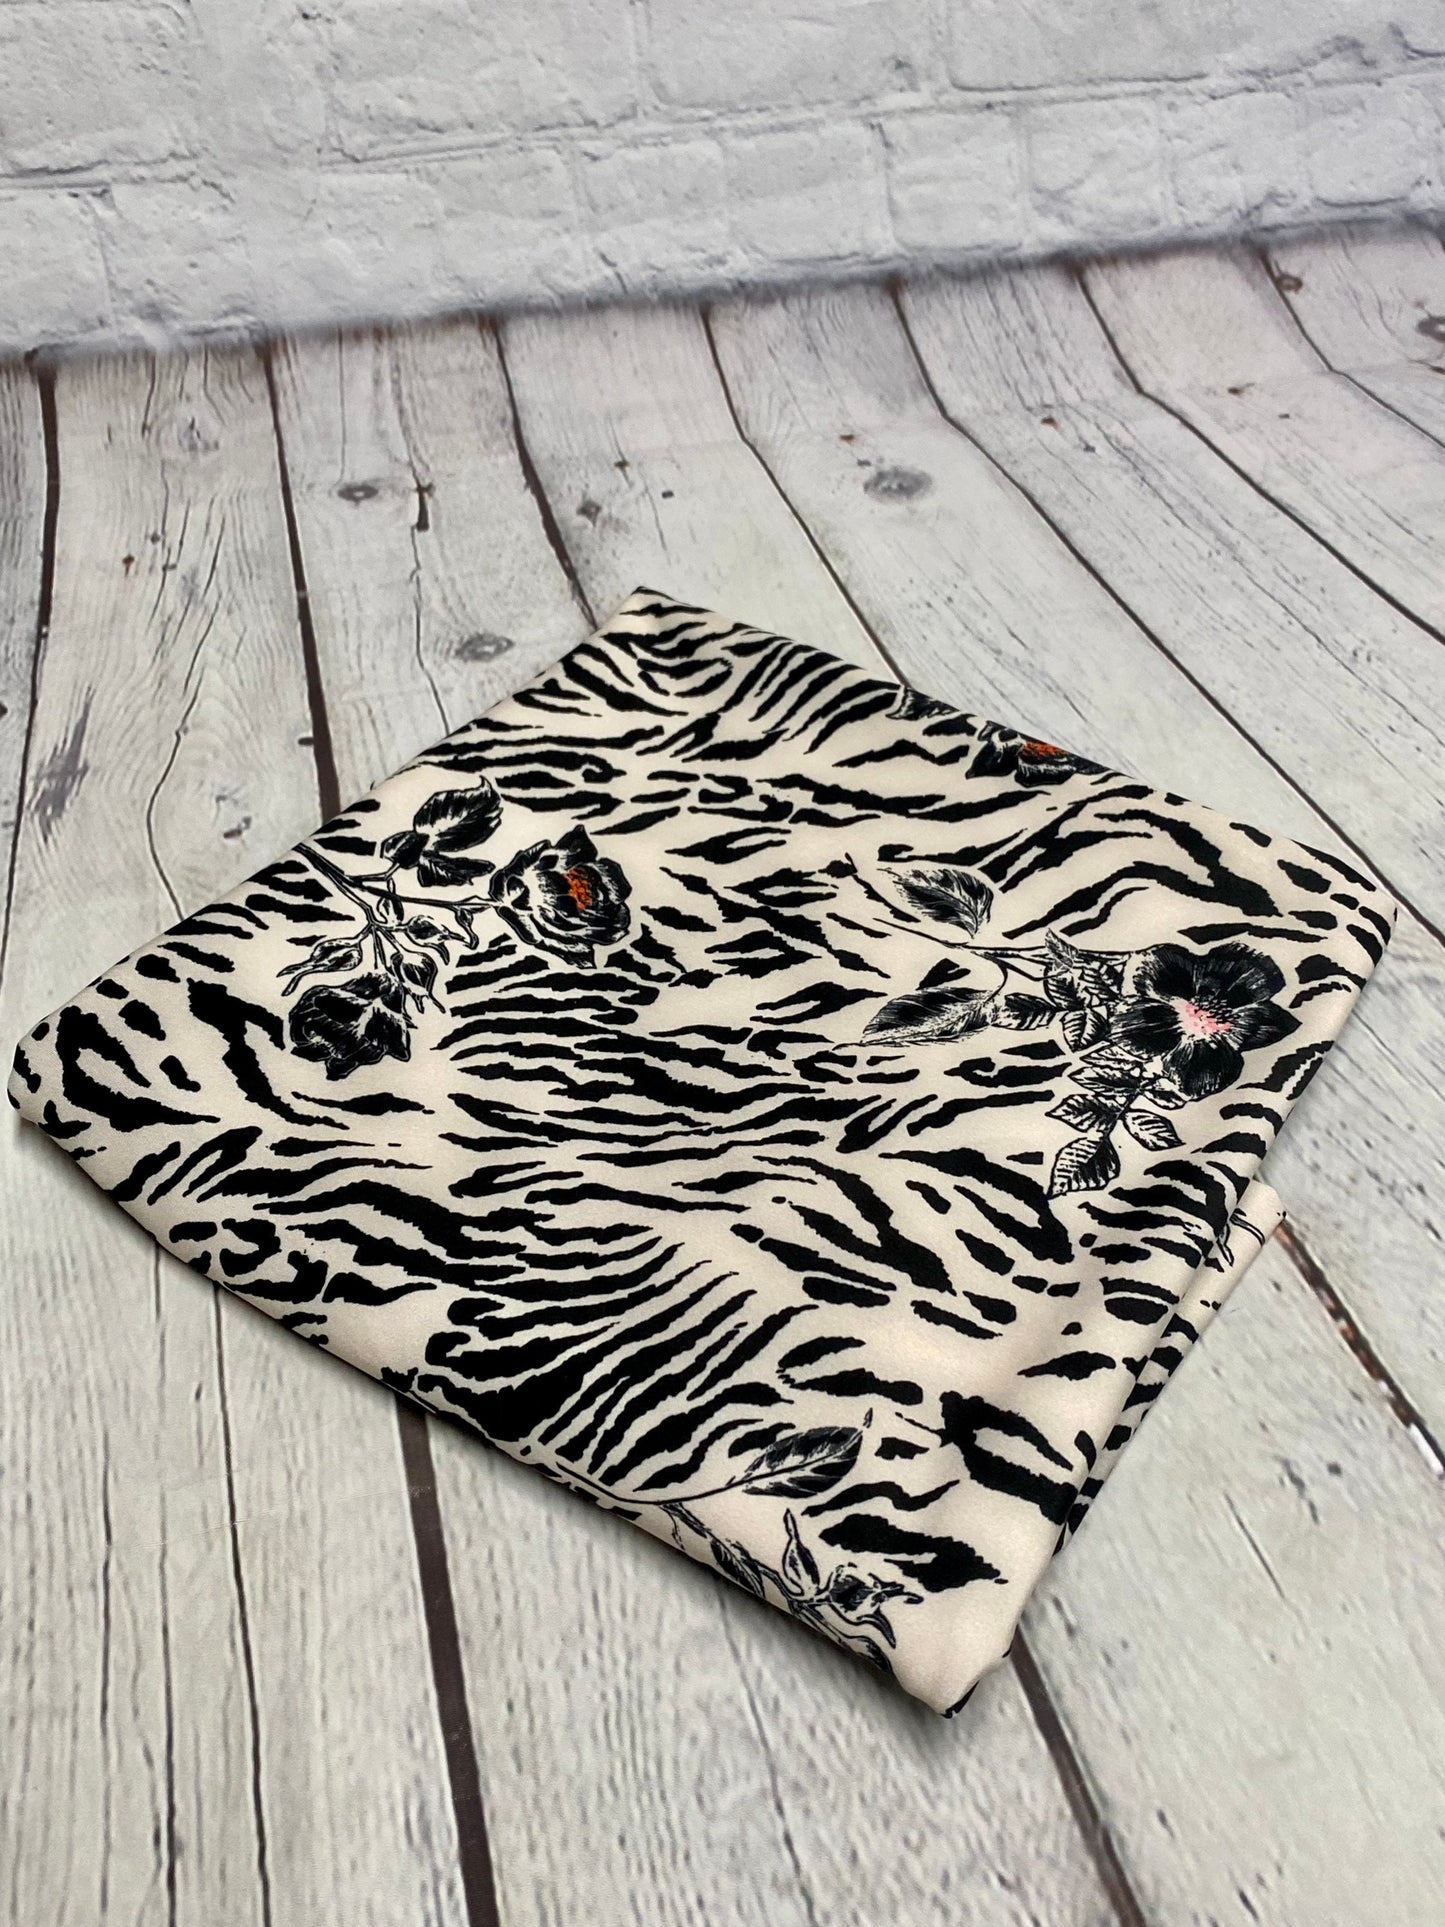 4 Way Stretch Print Nylon Spandex Fabric By The Yard Tricot Swim Wear Bikini Active Wear Cream Cheetah Rose Zebra Animal  Print 280 GSM